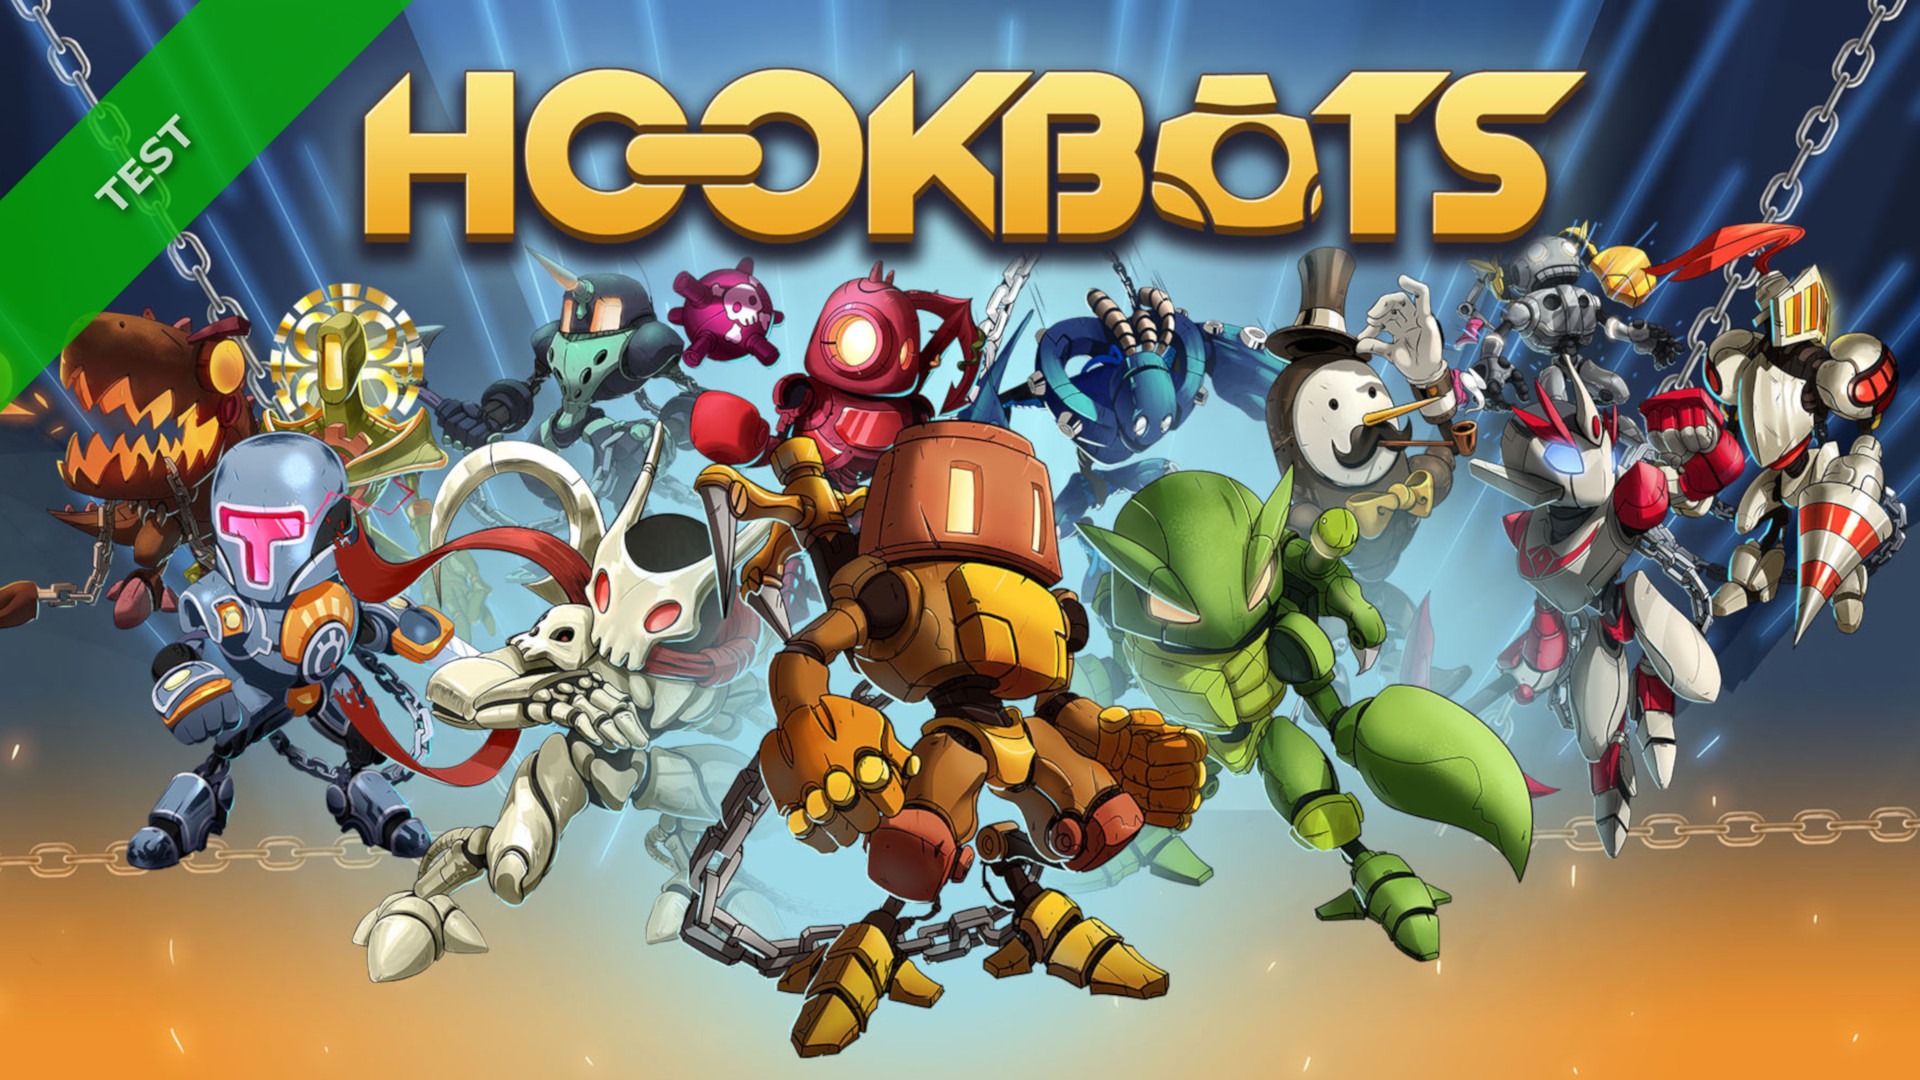 Hookbots